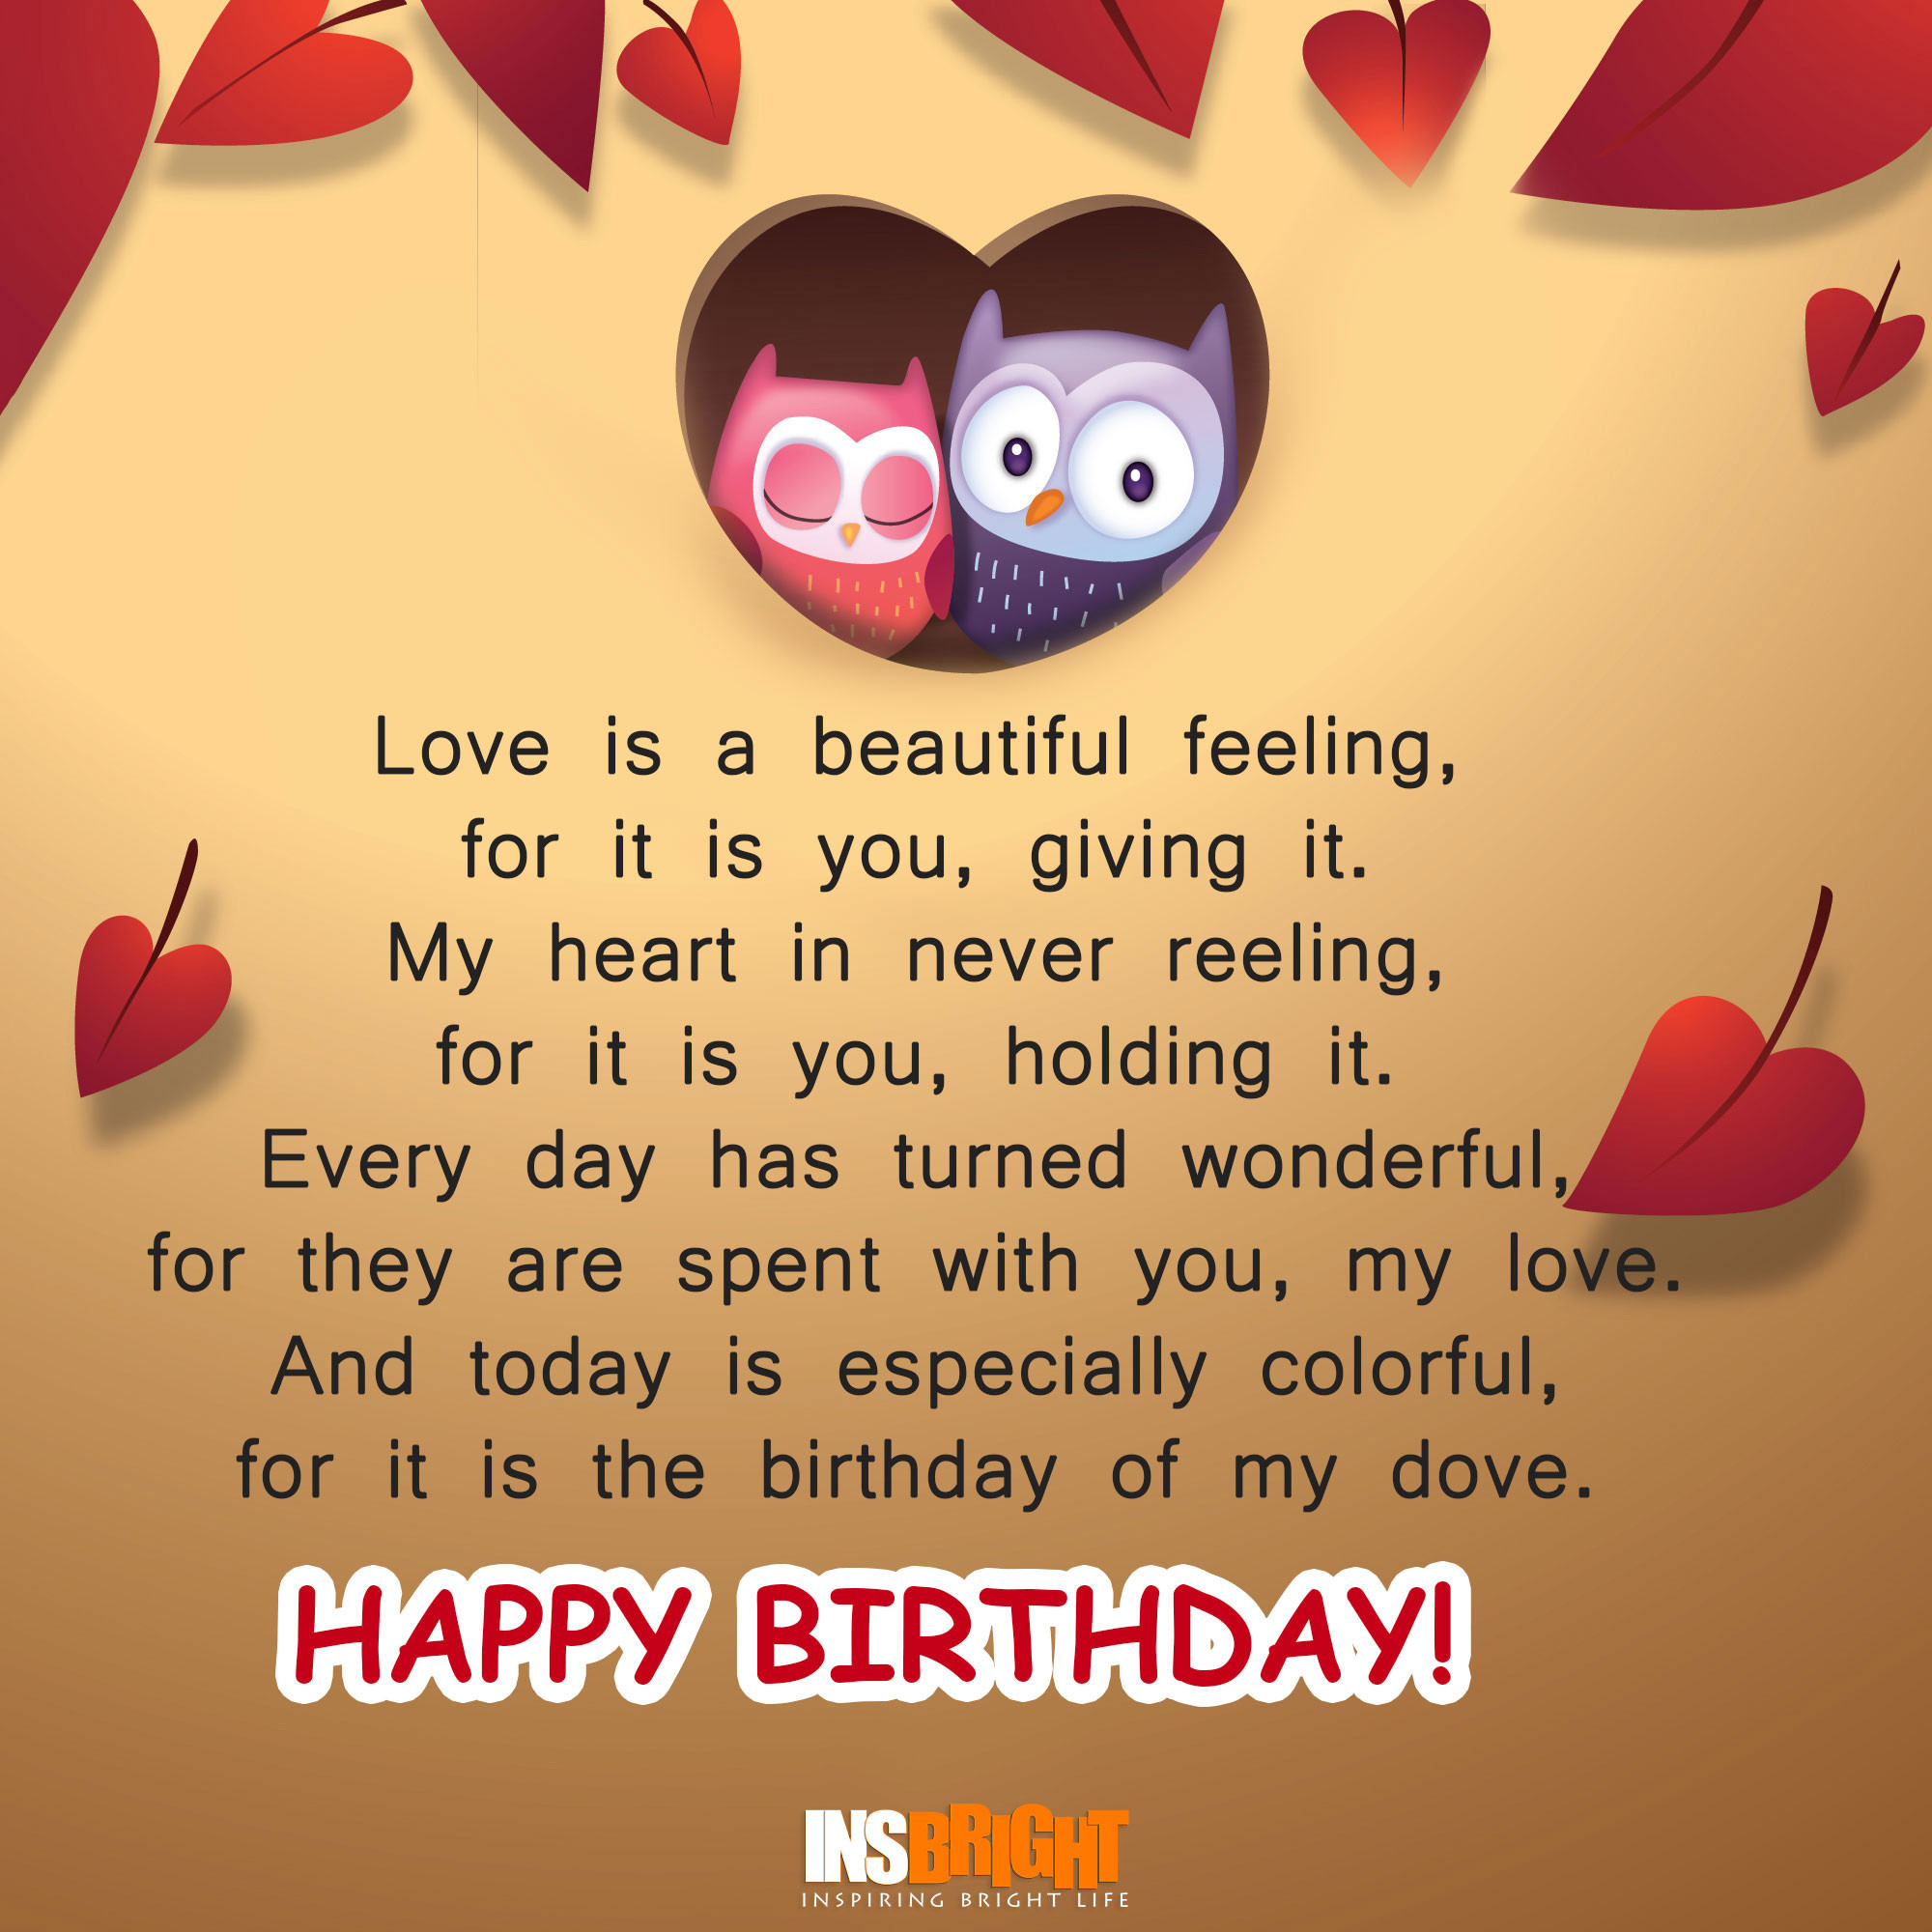 Romantic Happy Birthday Quotes For Husband
 Romantic Happy Birthday Poems For Husband From Wife